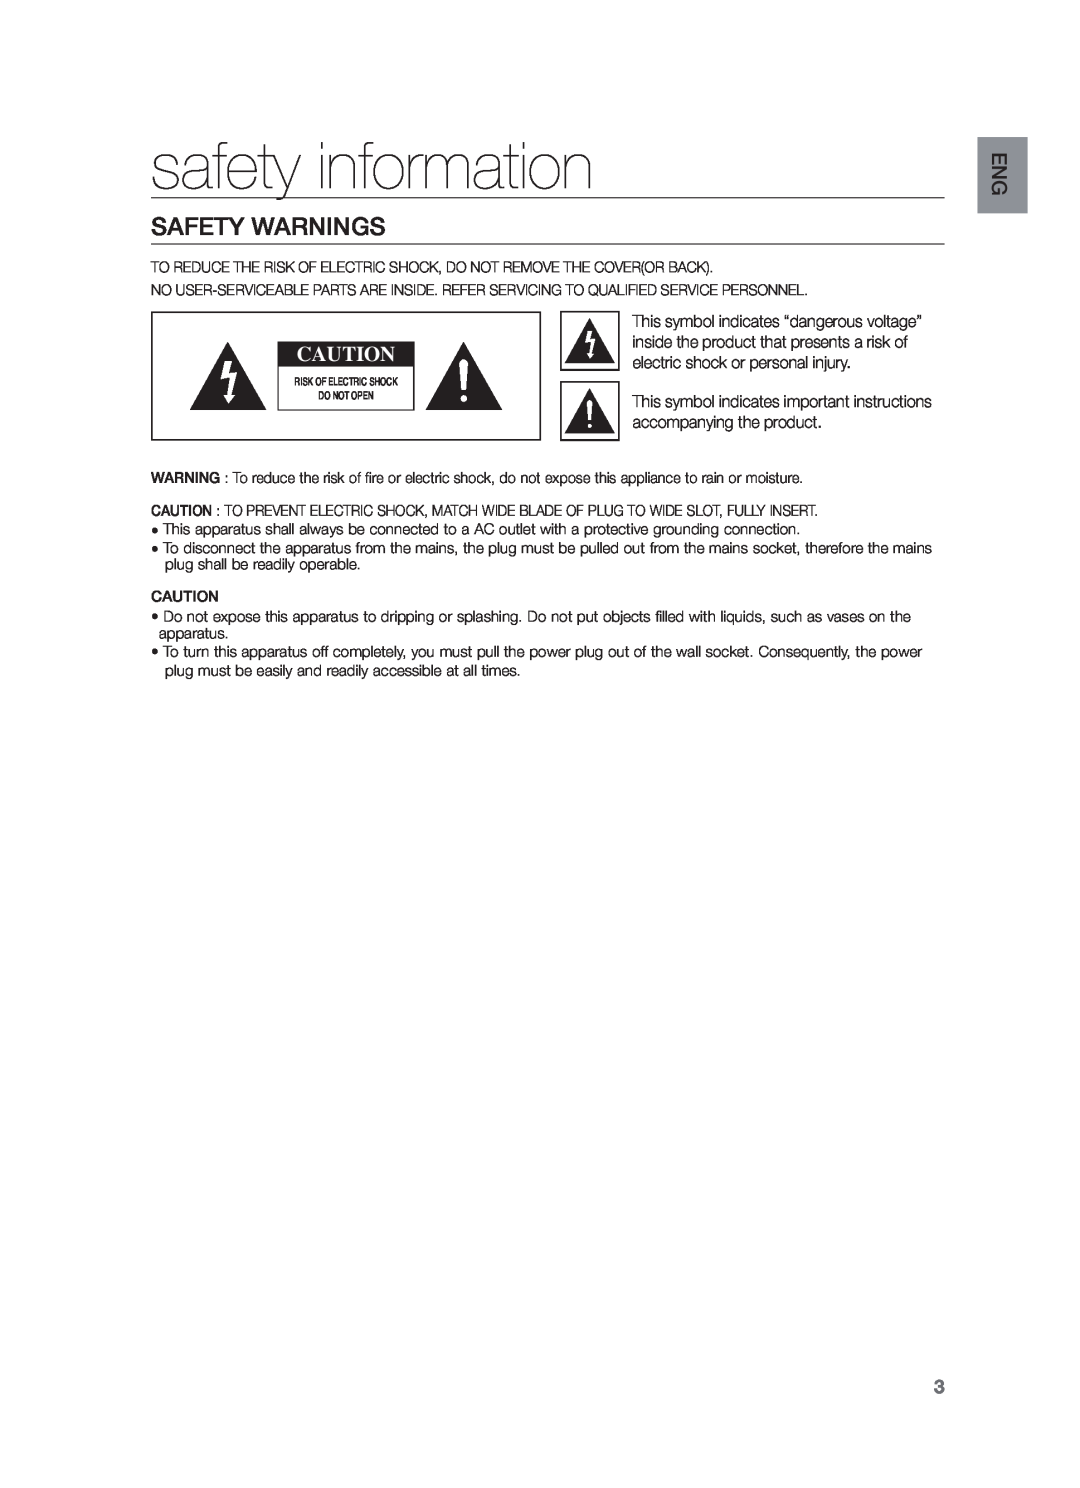 Samsung HW-F551/TK, HW-F551/XN, HW-F551/EN, HW-F550/EN, HW-F550/XN, HW-F551/ZF, HW-F550/ZF safety information, Safety Warnings 